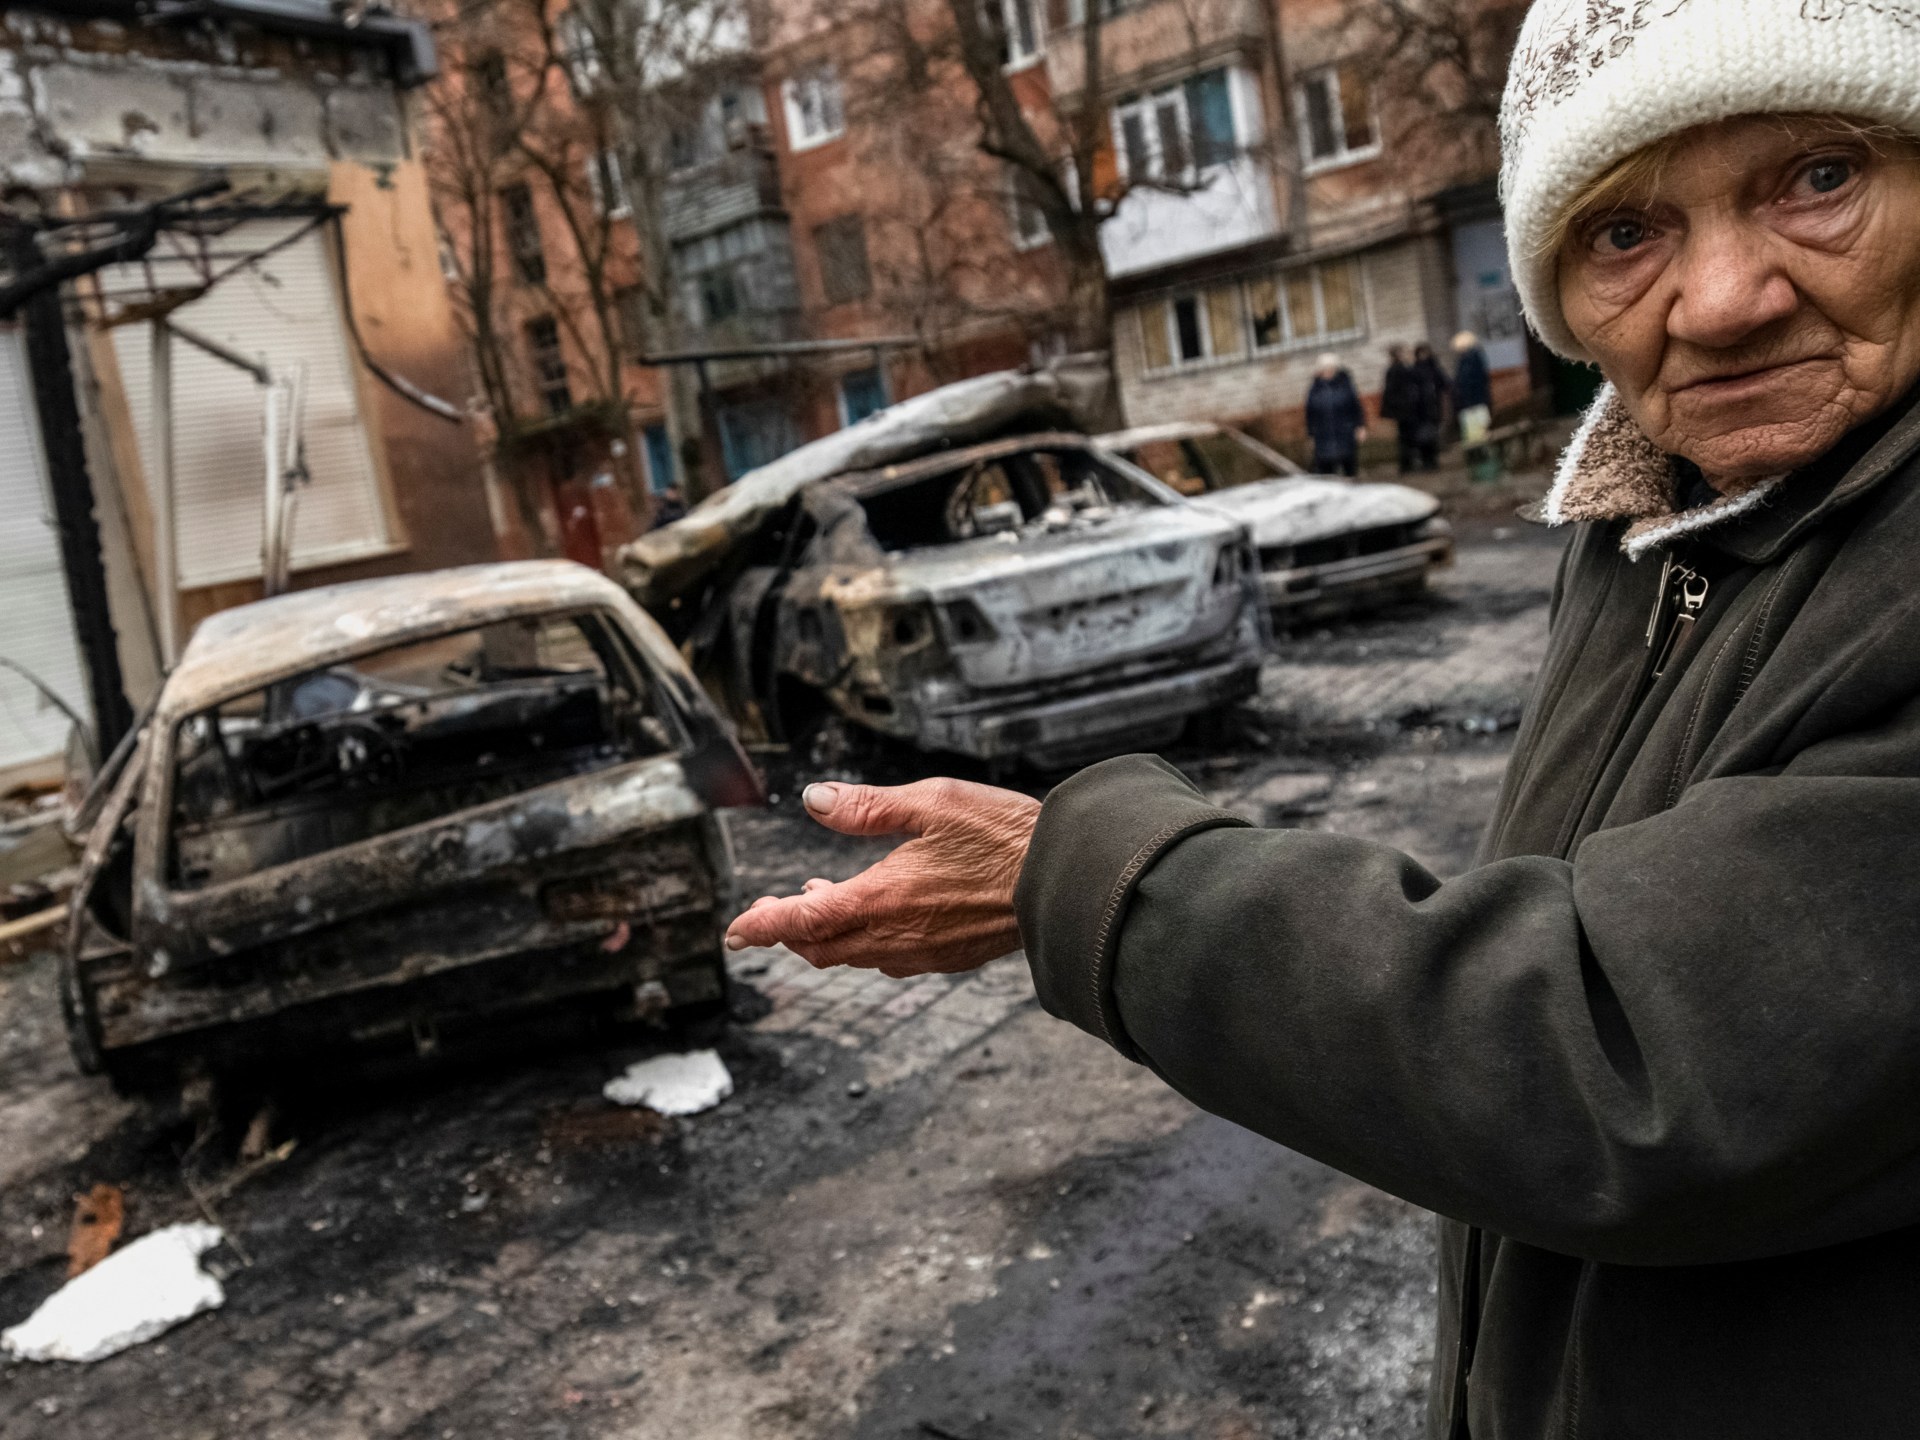 Ukraina mengatakan 21 tewas dalam serangan Rusia di Kherson |  Berita perang Rusia-Ukraina